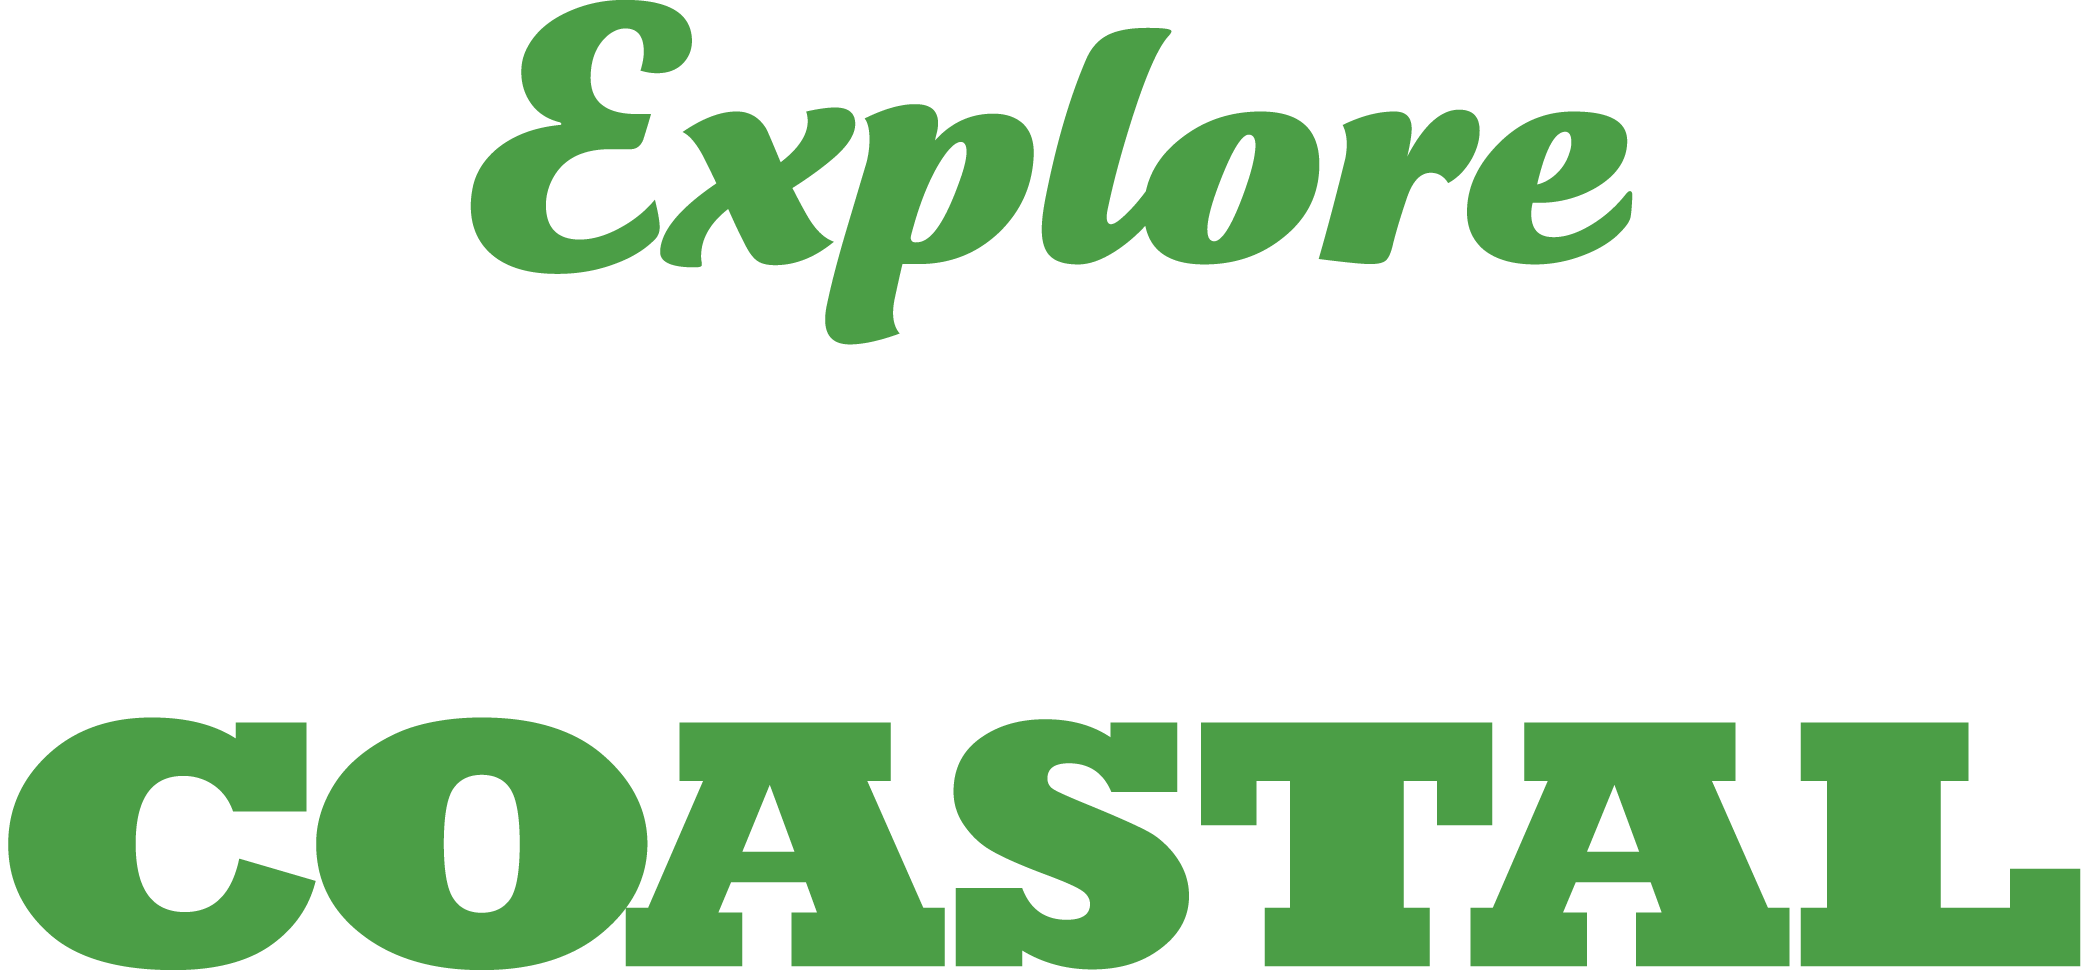 Explore Lone Star Coastal